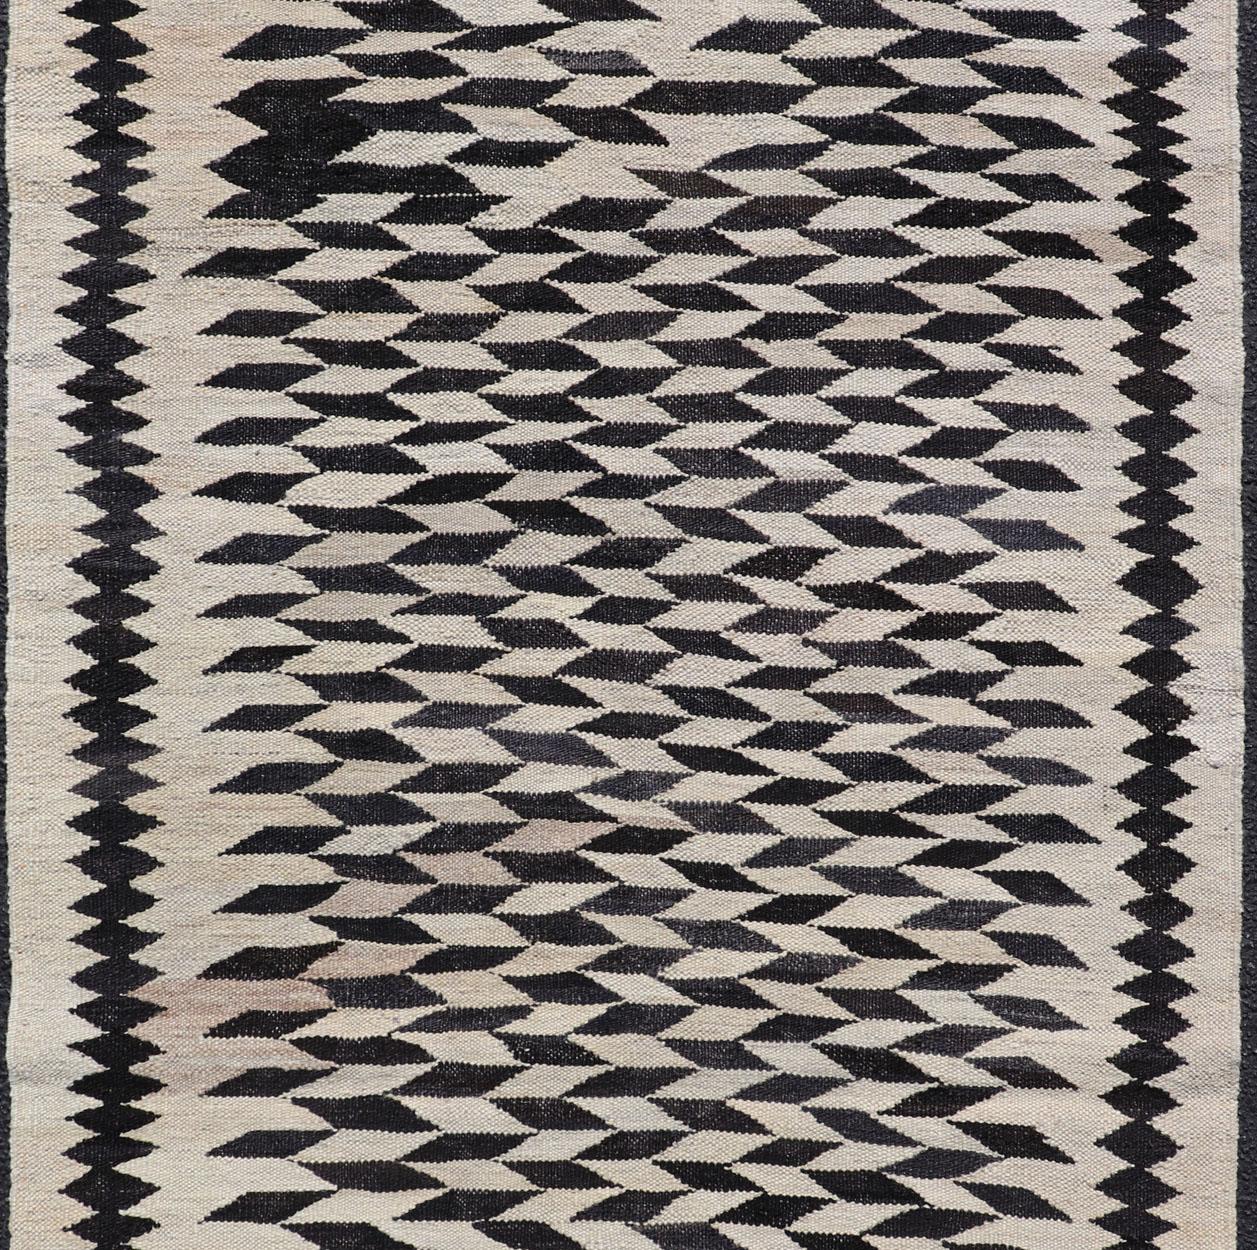 Hand-Woven Black and Cream Checkered Kilim with Tribal Motif Modern Kilim